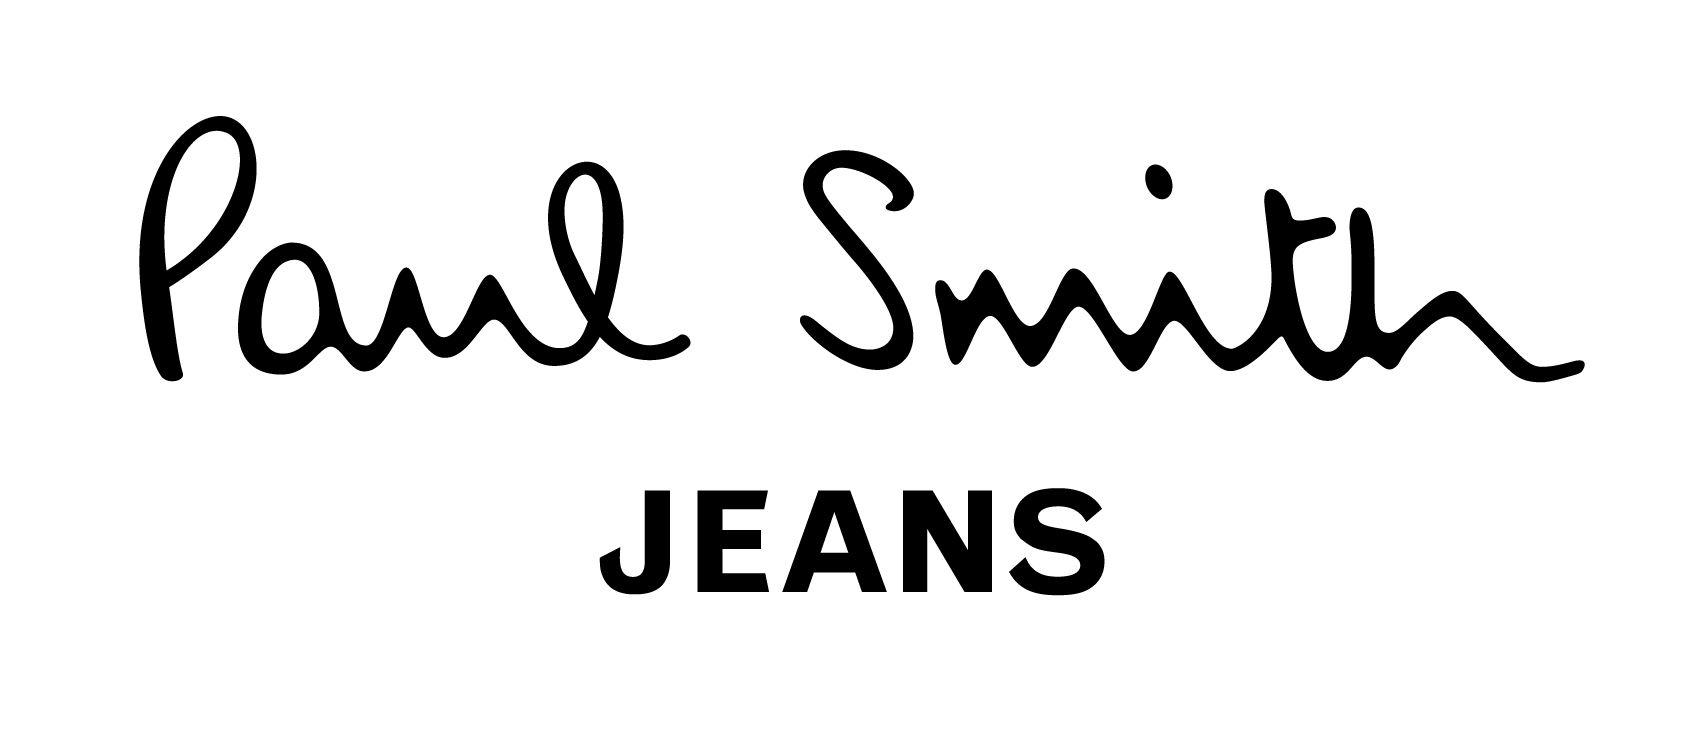 Silver Jeans Logo - 15 Top Designer Jeans Brands and Logos - BrandonGaille.com